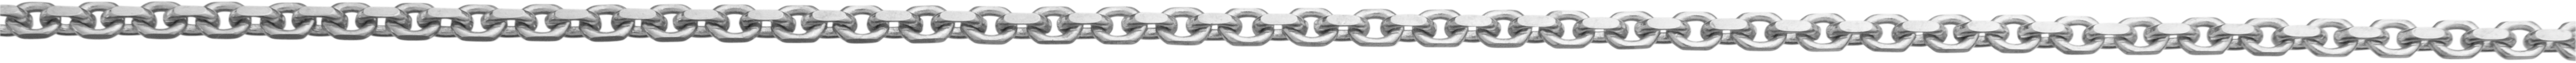 ankerketting gediamanteerd zilver 925/- 1,60mm, draad dikte 0,50mm